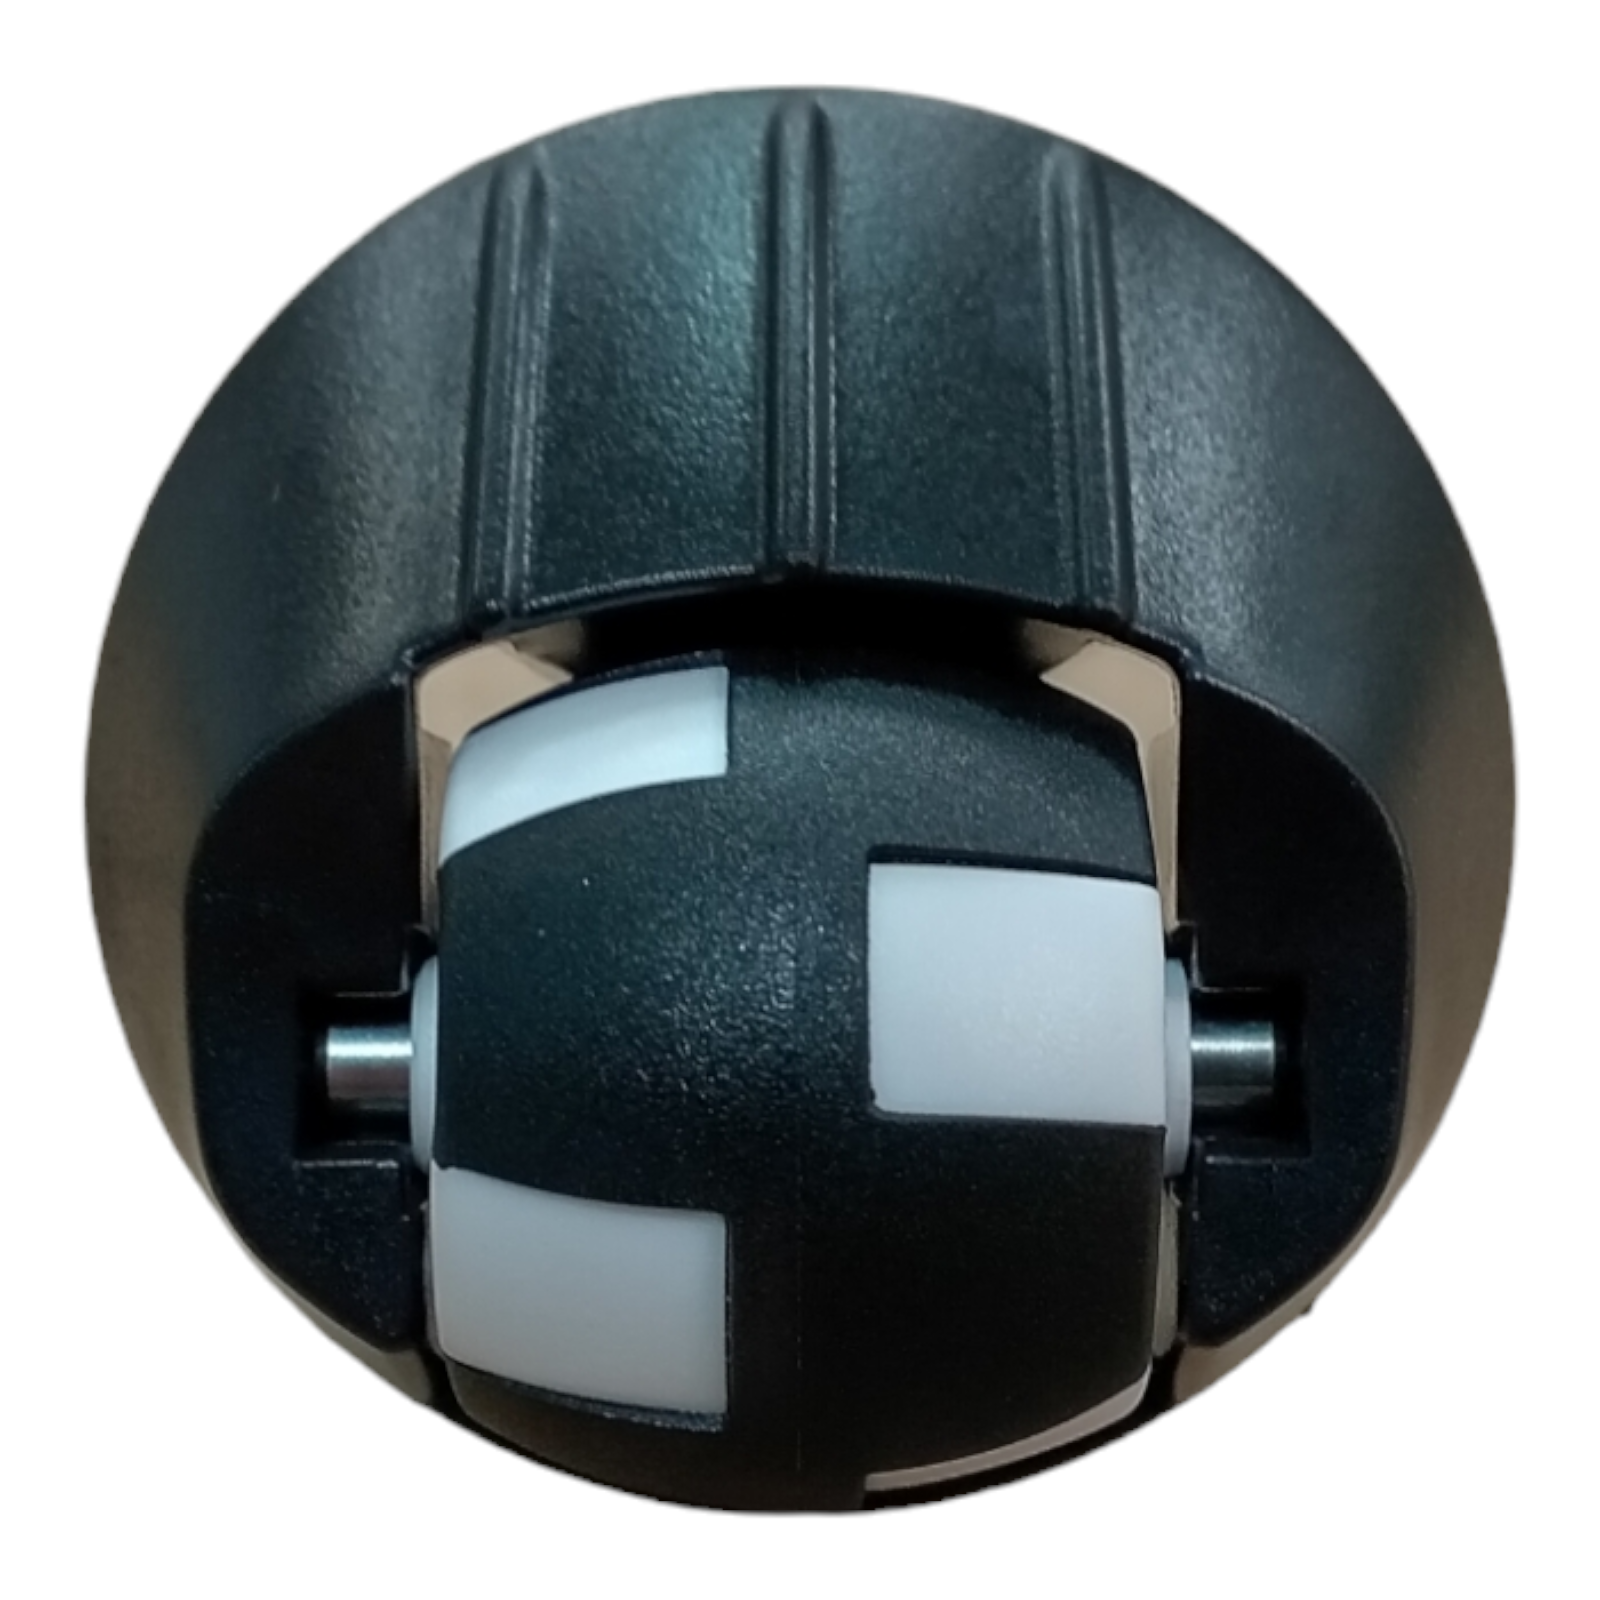 Ruota motrice dx nera robot aspirapolvere Rowenta RS-2230001040, offerta  vendita online